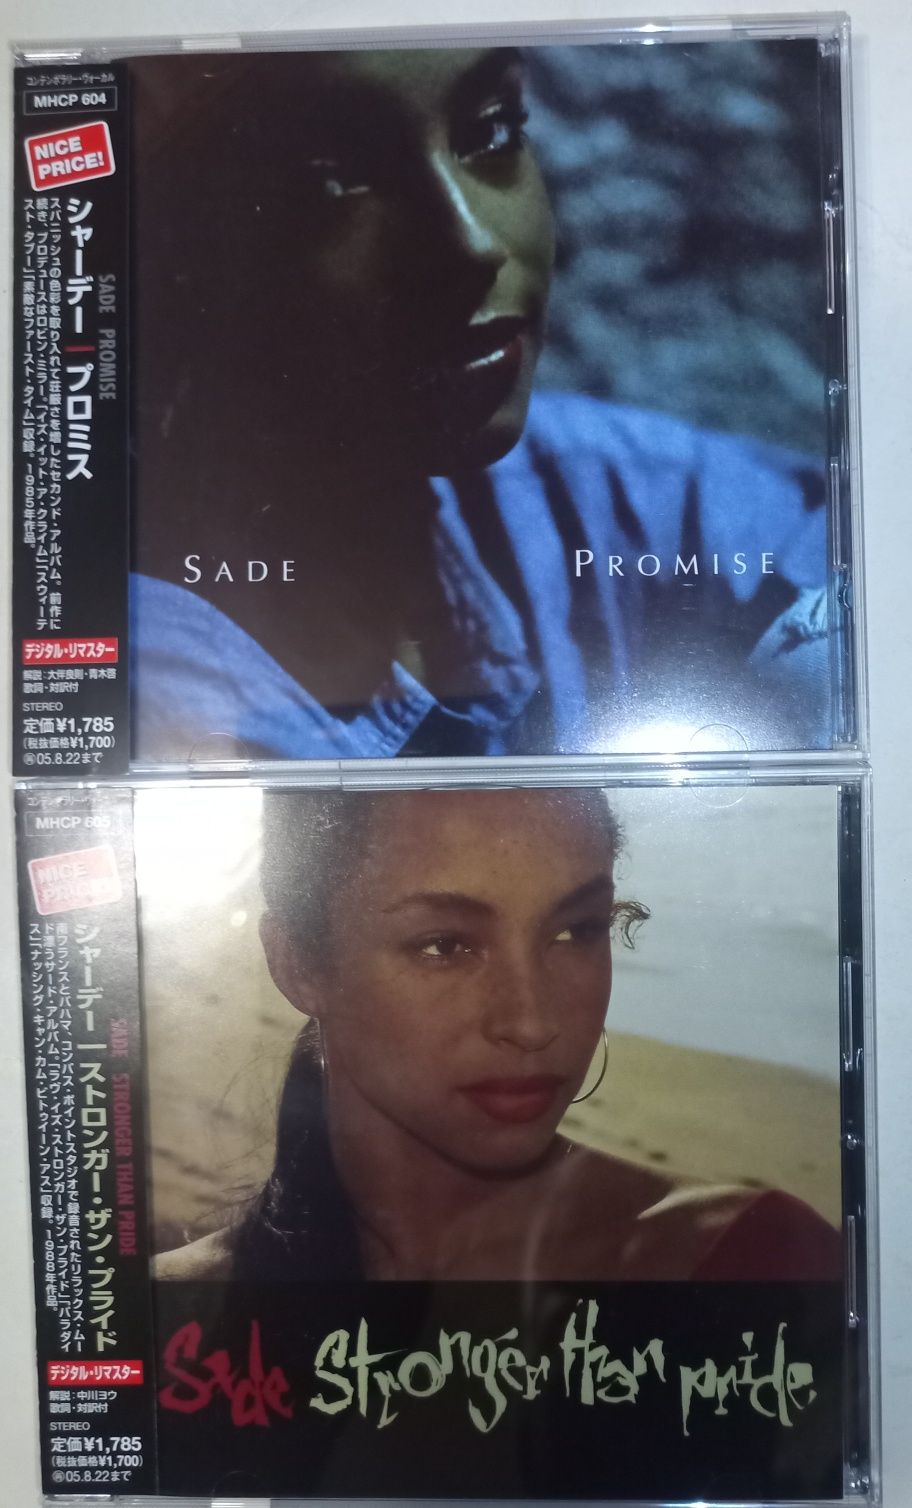 Sade. Japan CD. Maggie Reilly. Sally OLDFIELD. Фірма CD.